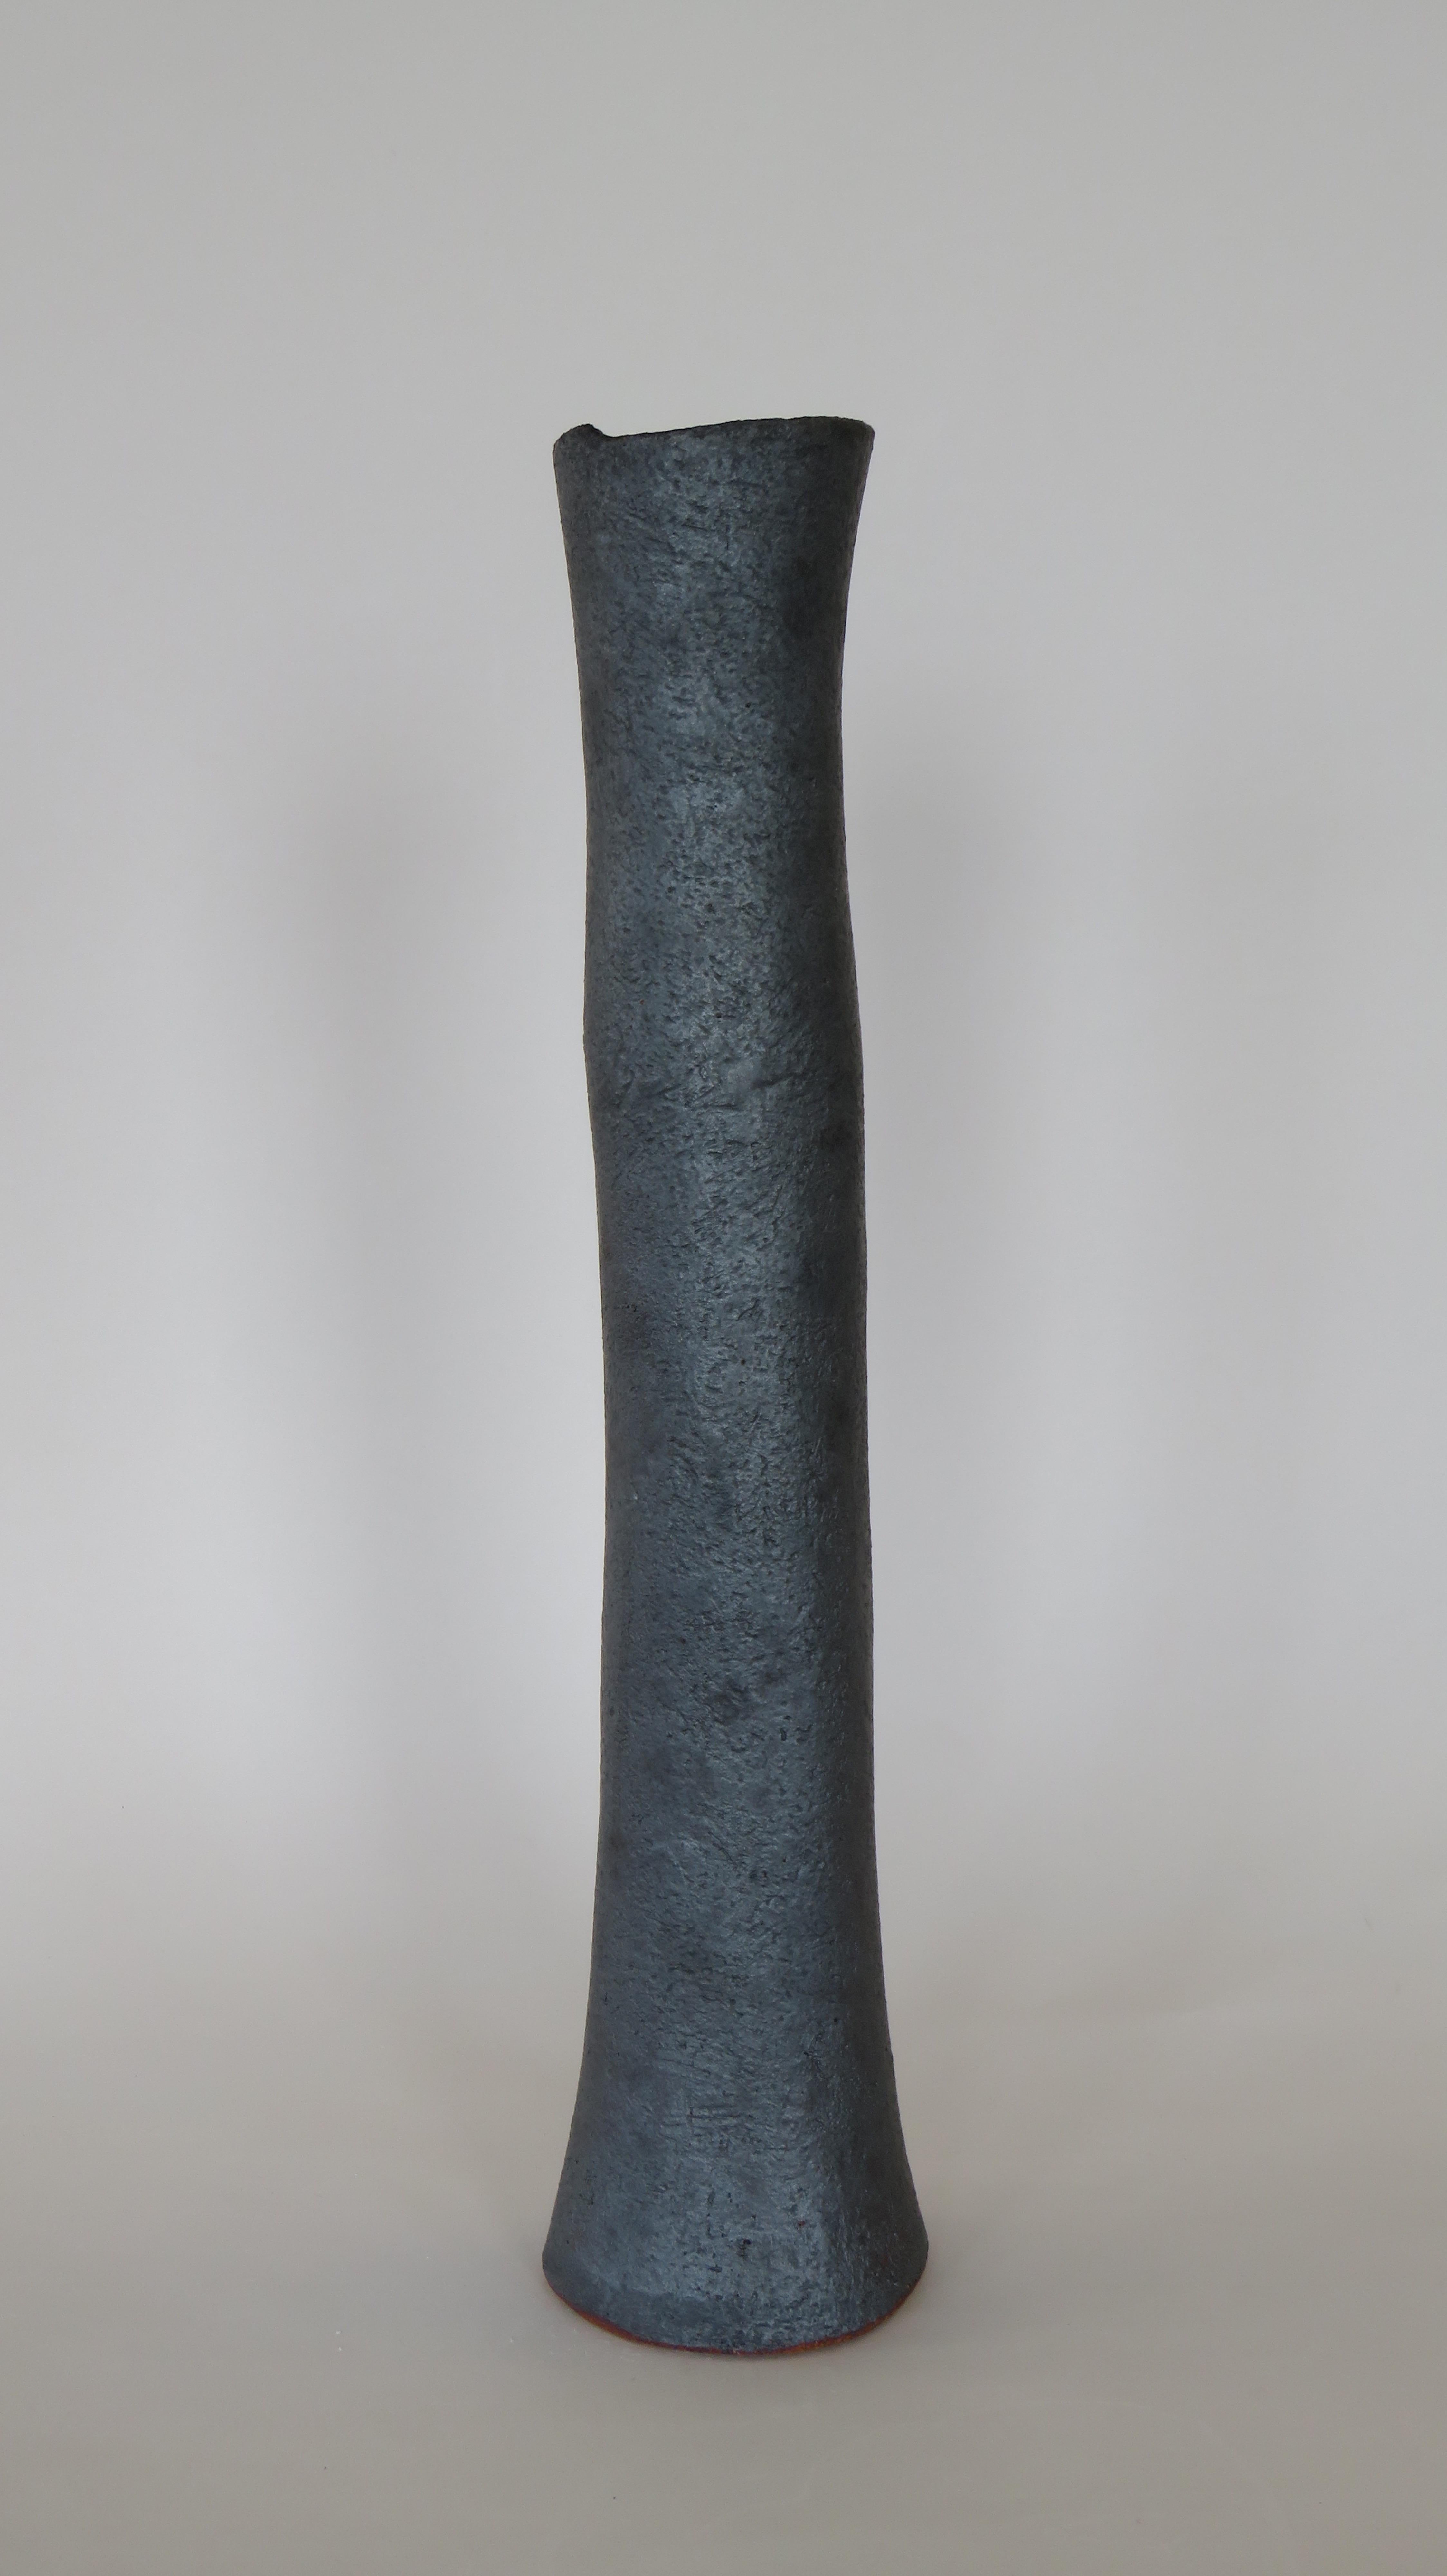 American Tall, Tubular Metallic Black Ceramic Stoneware Vase, Hand Built 19 Inches Tall